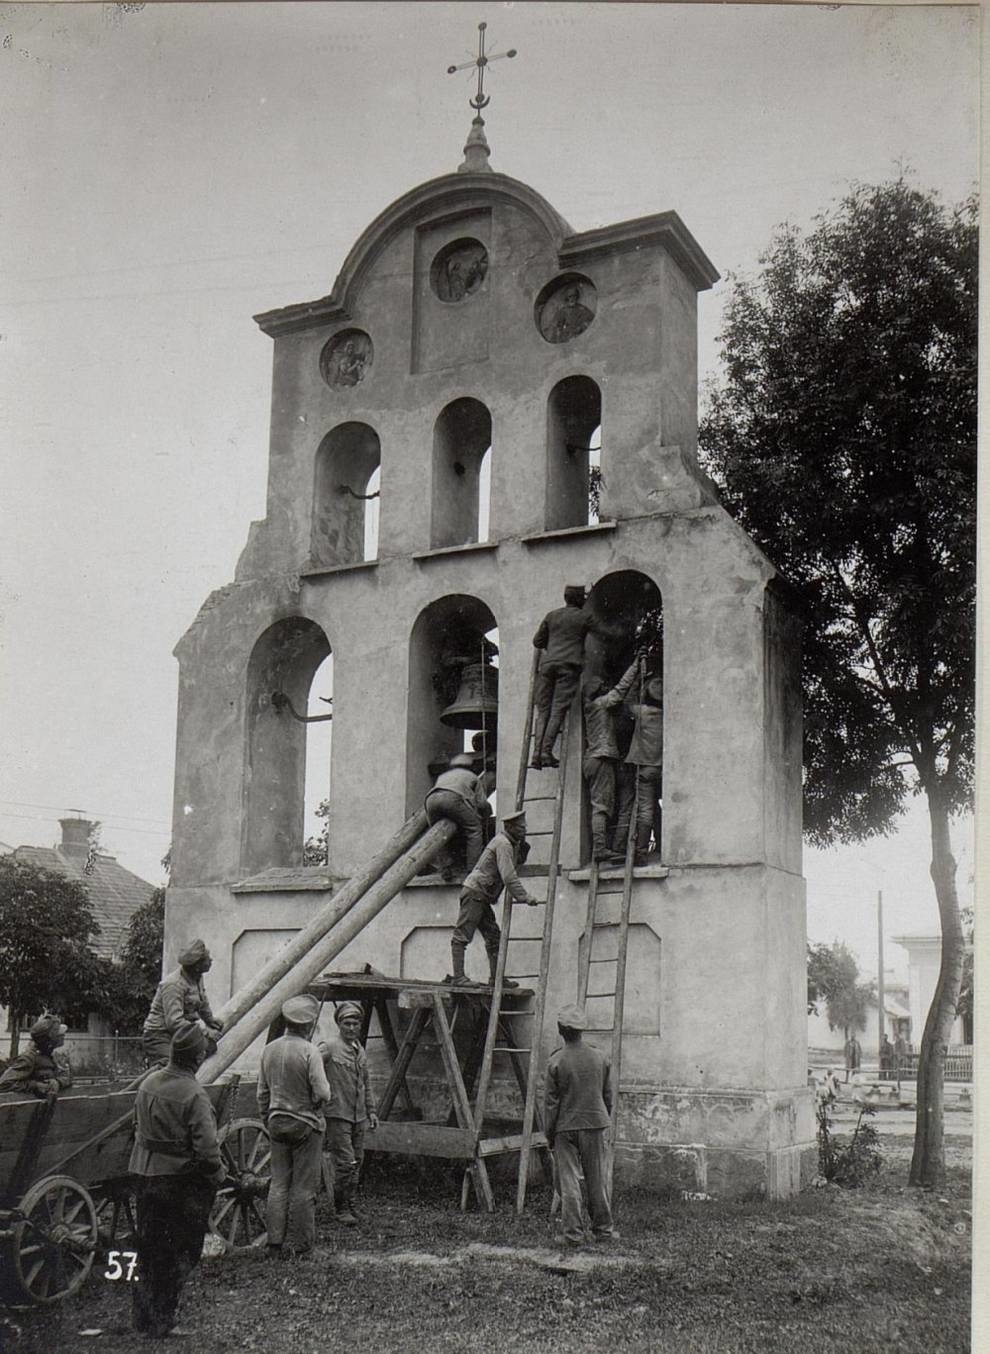 Ukrainian city in photos from 1917